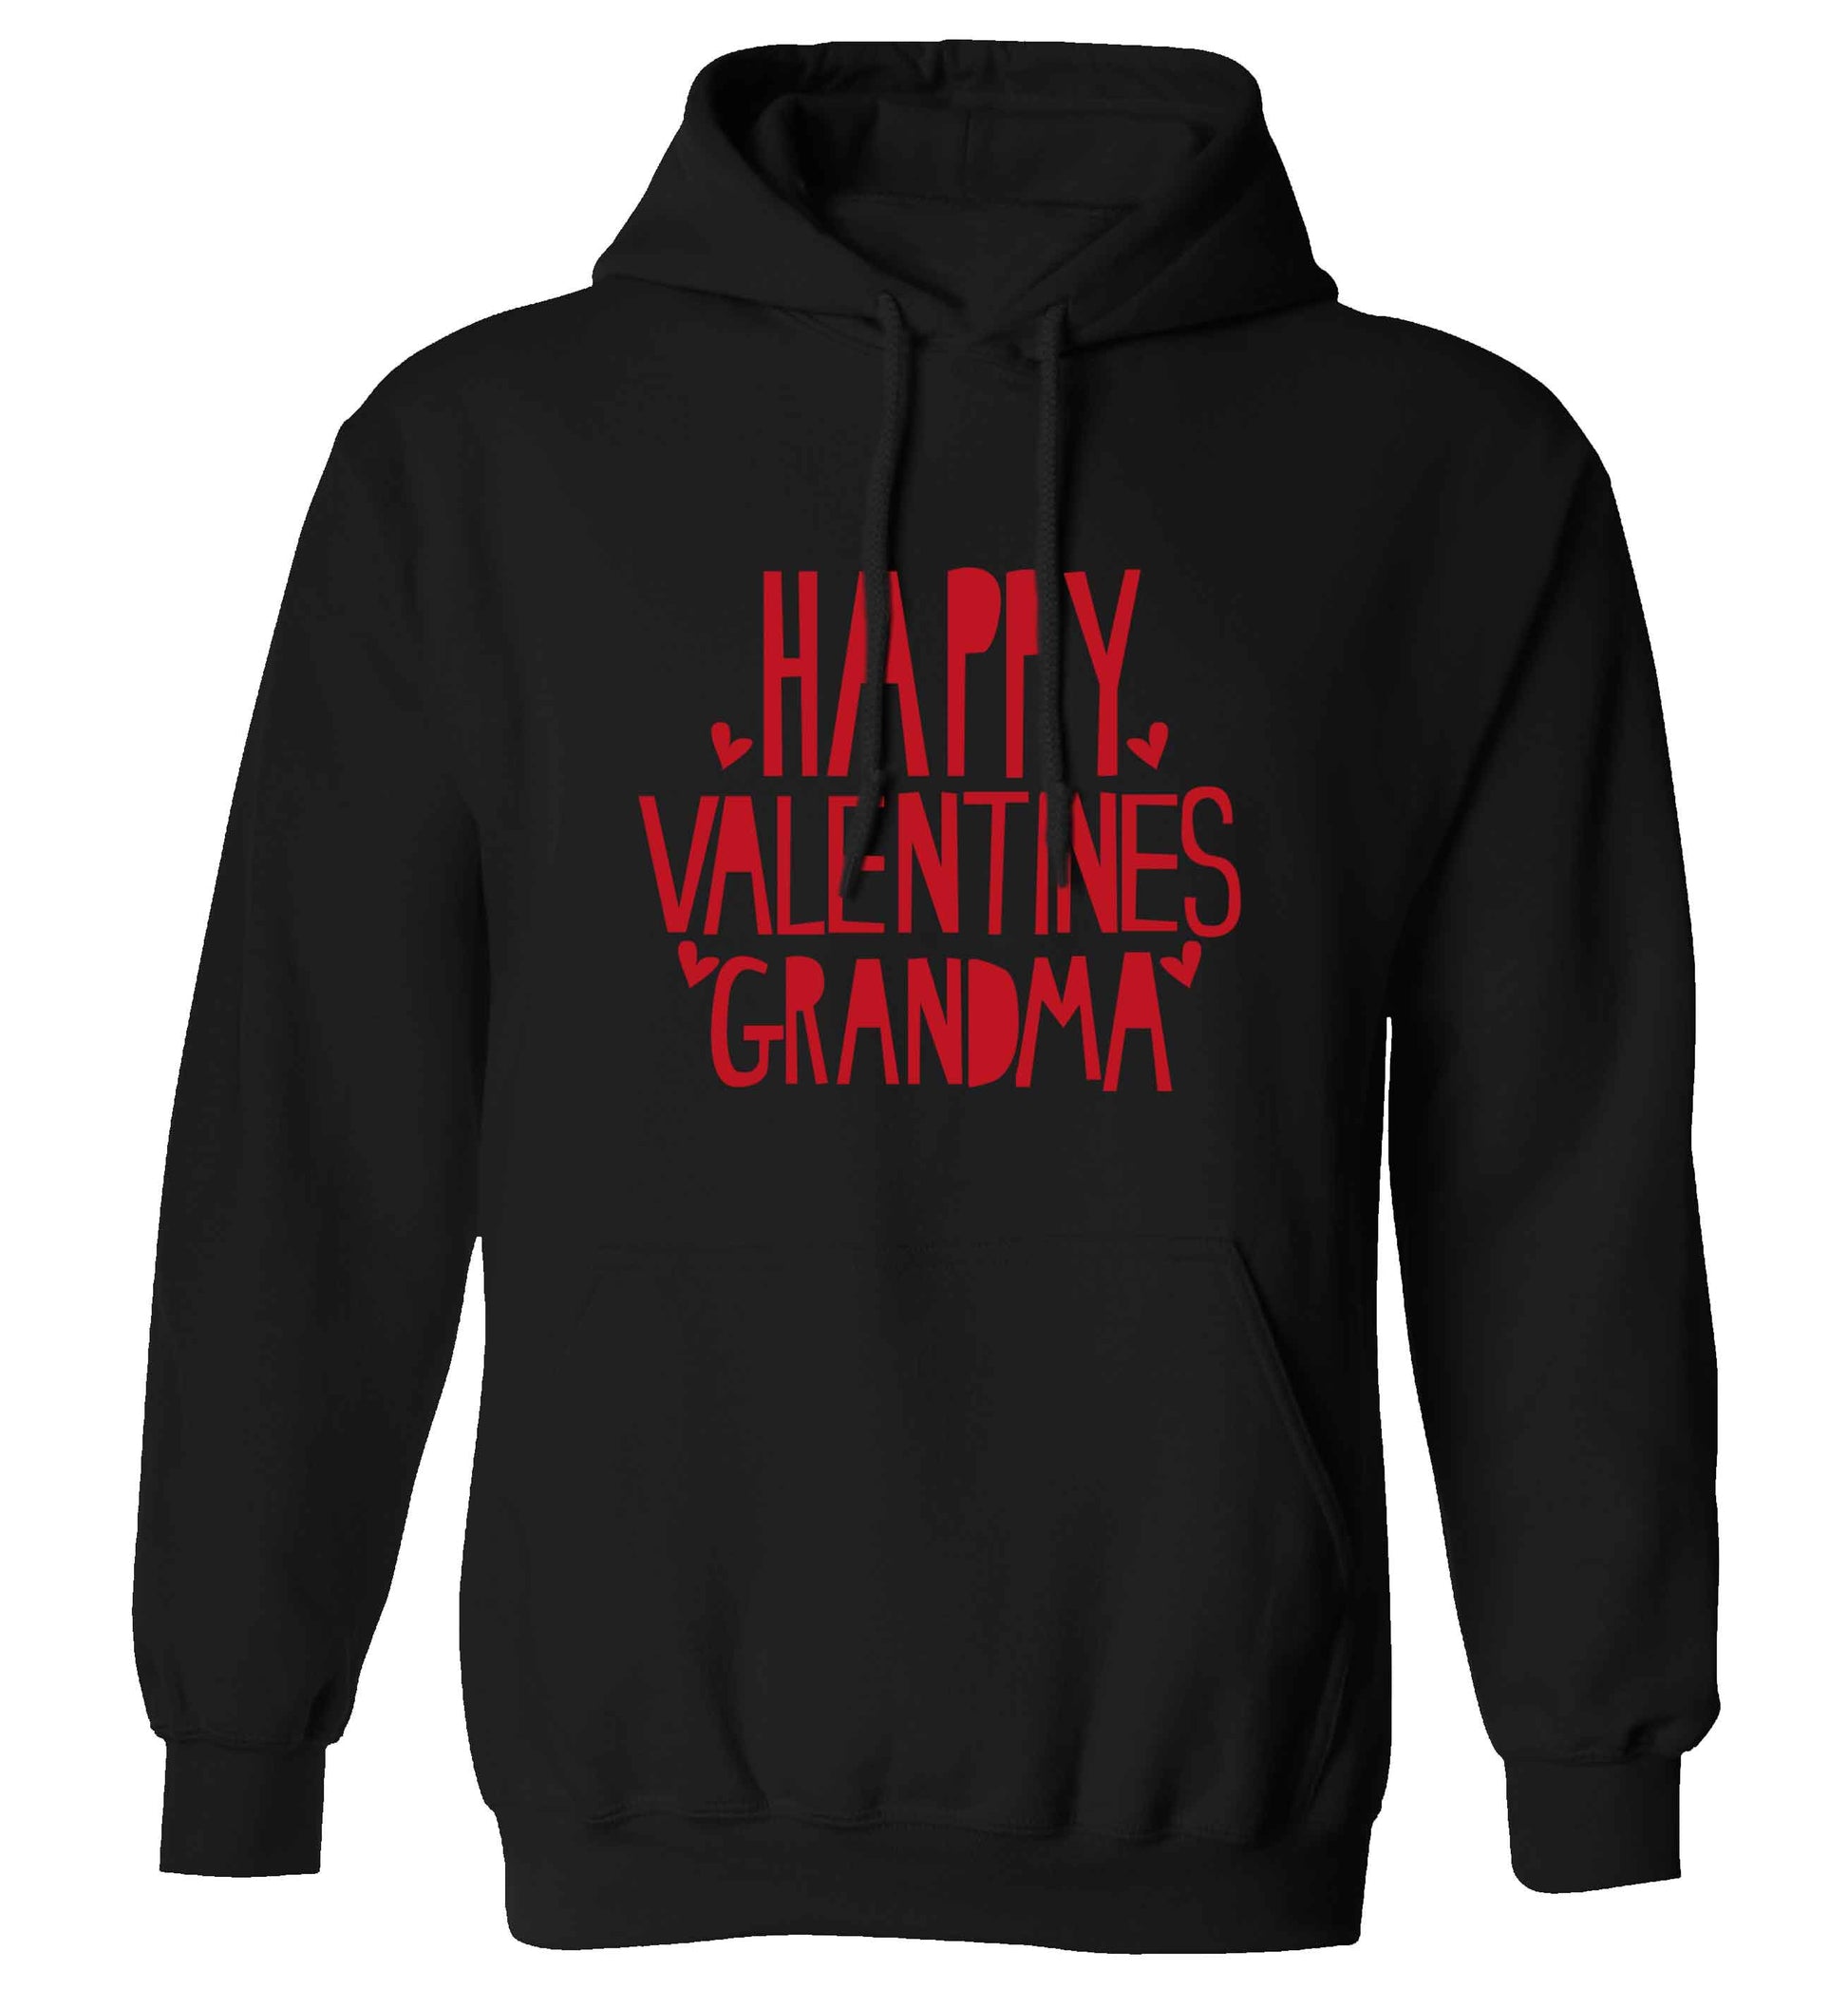 Happy valentines grandma adults unisex black hoodie 2XL